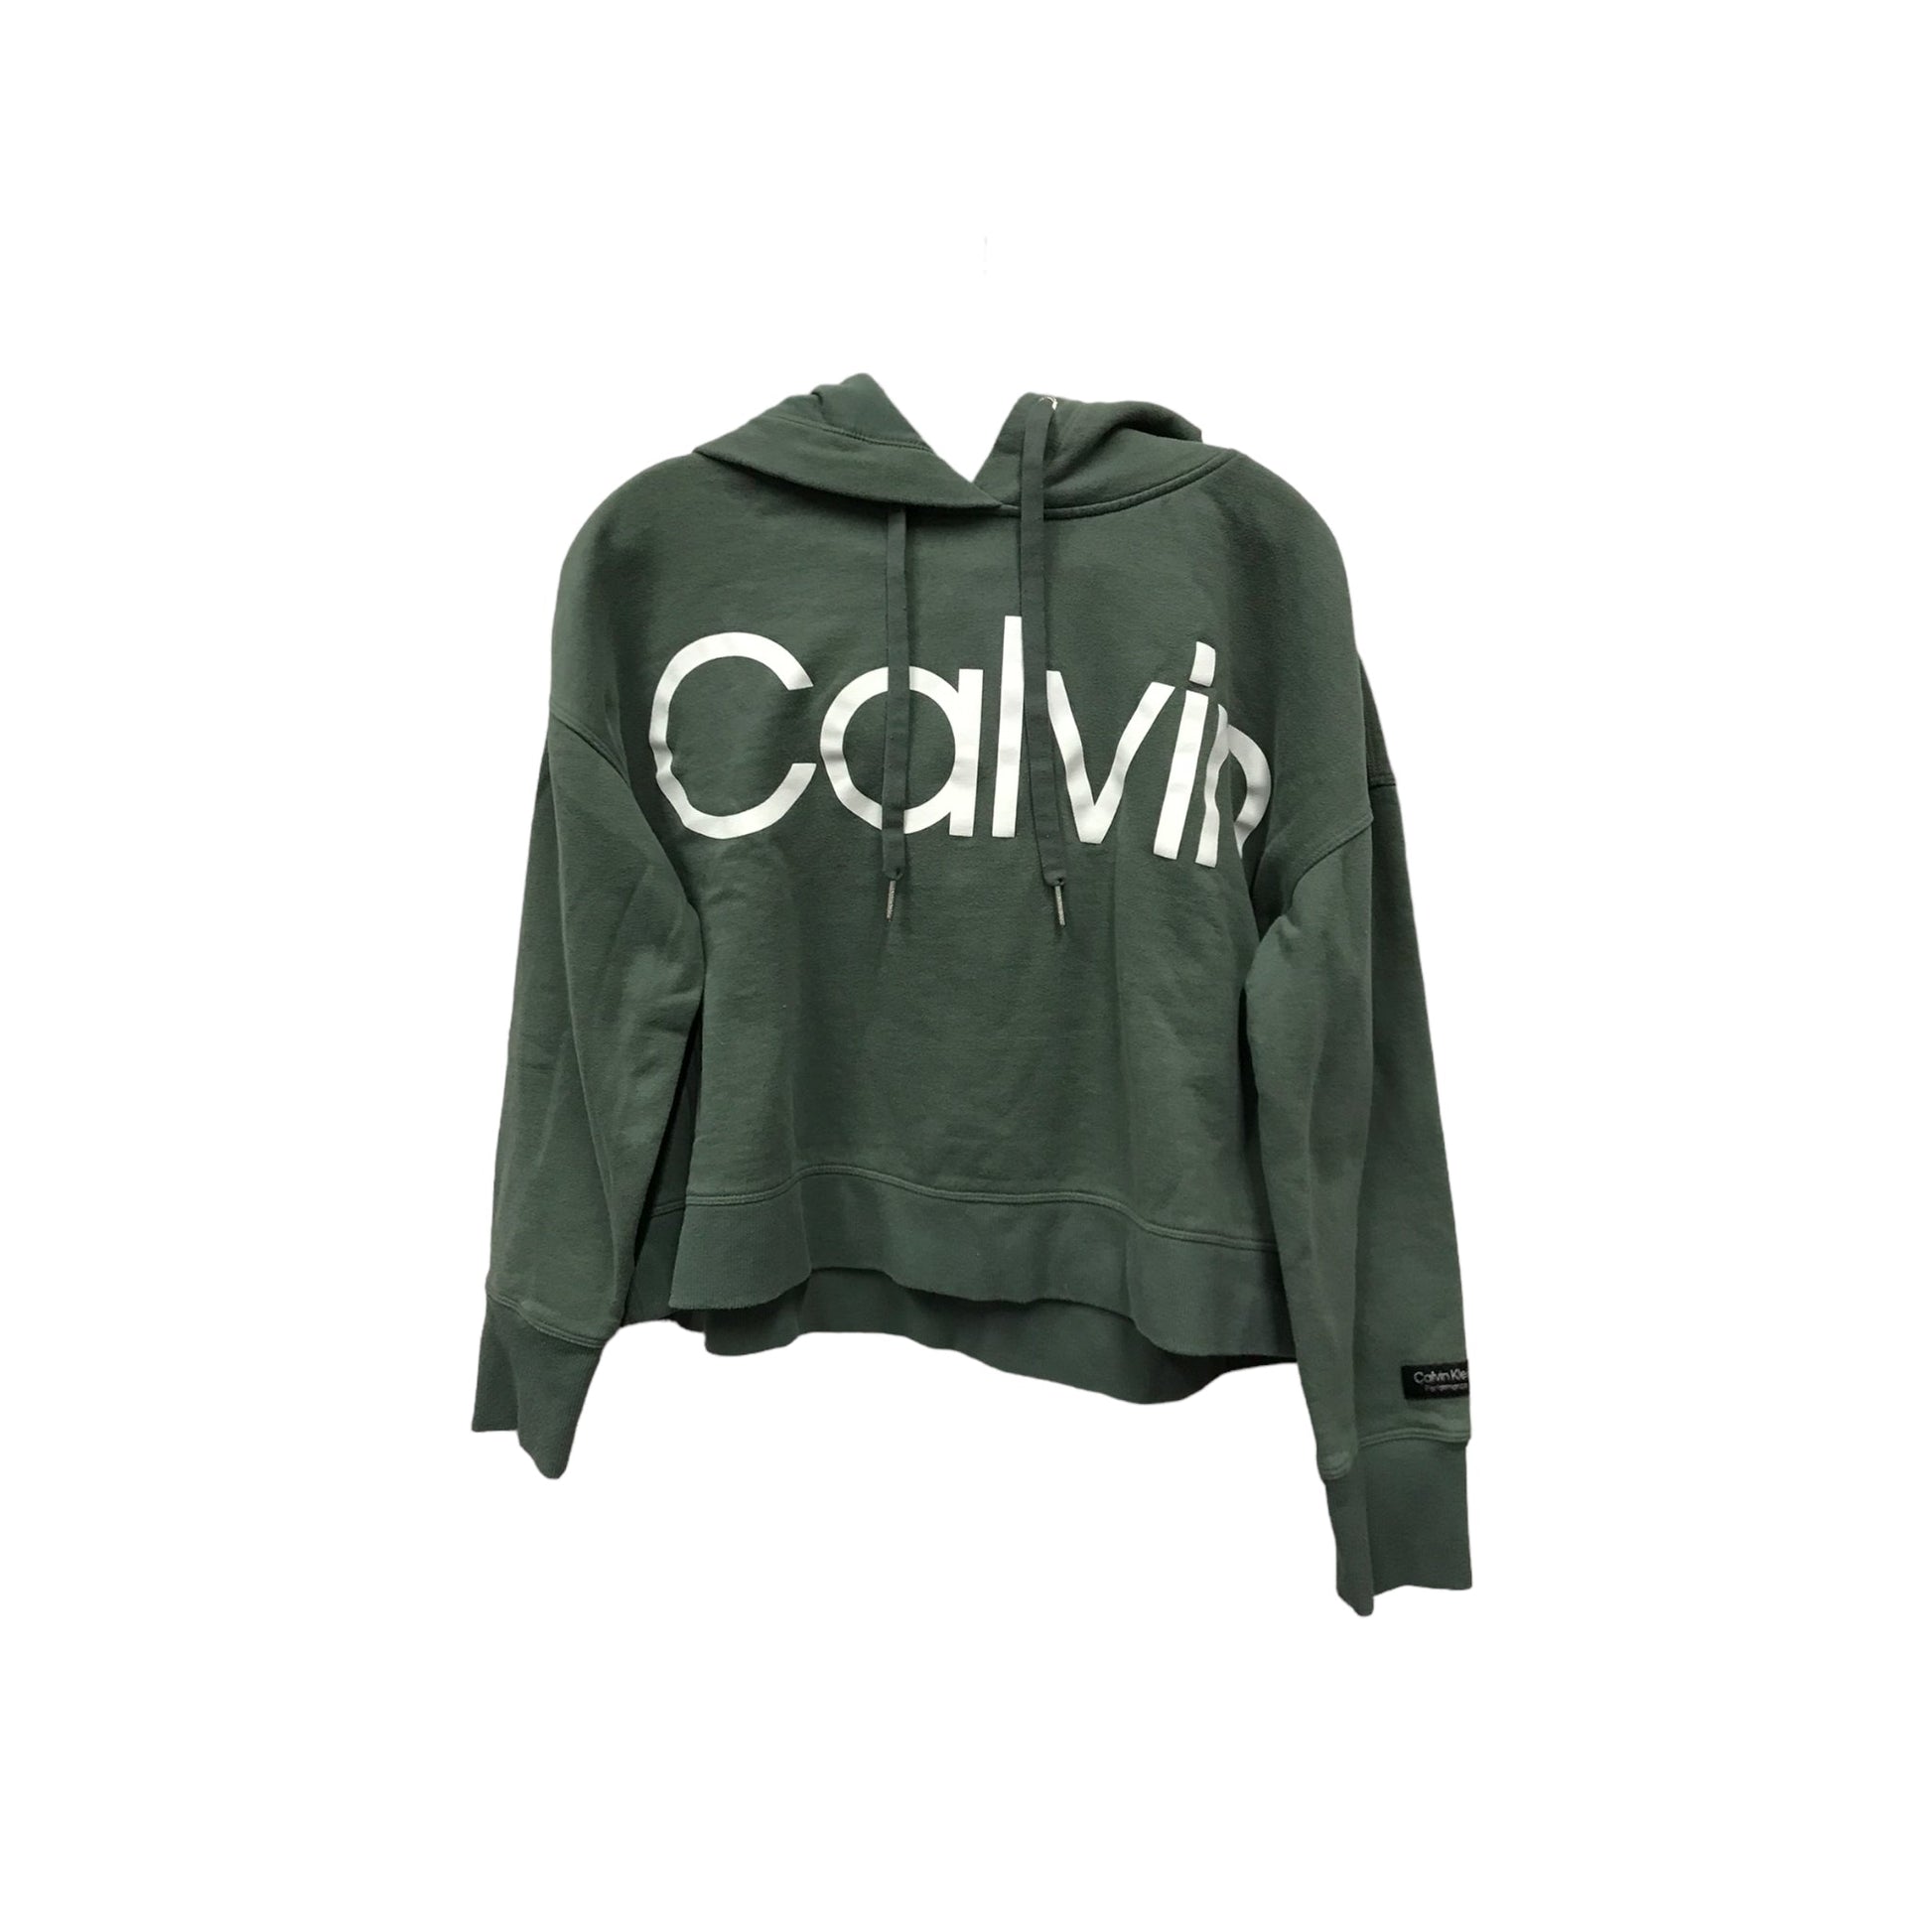 Athletic Sweatshirt Hoodie Klein Calvin Performance By Size: L